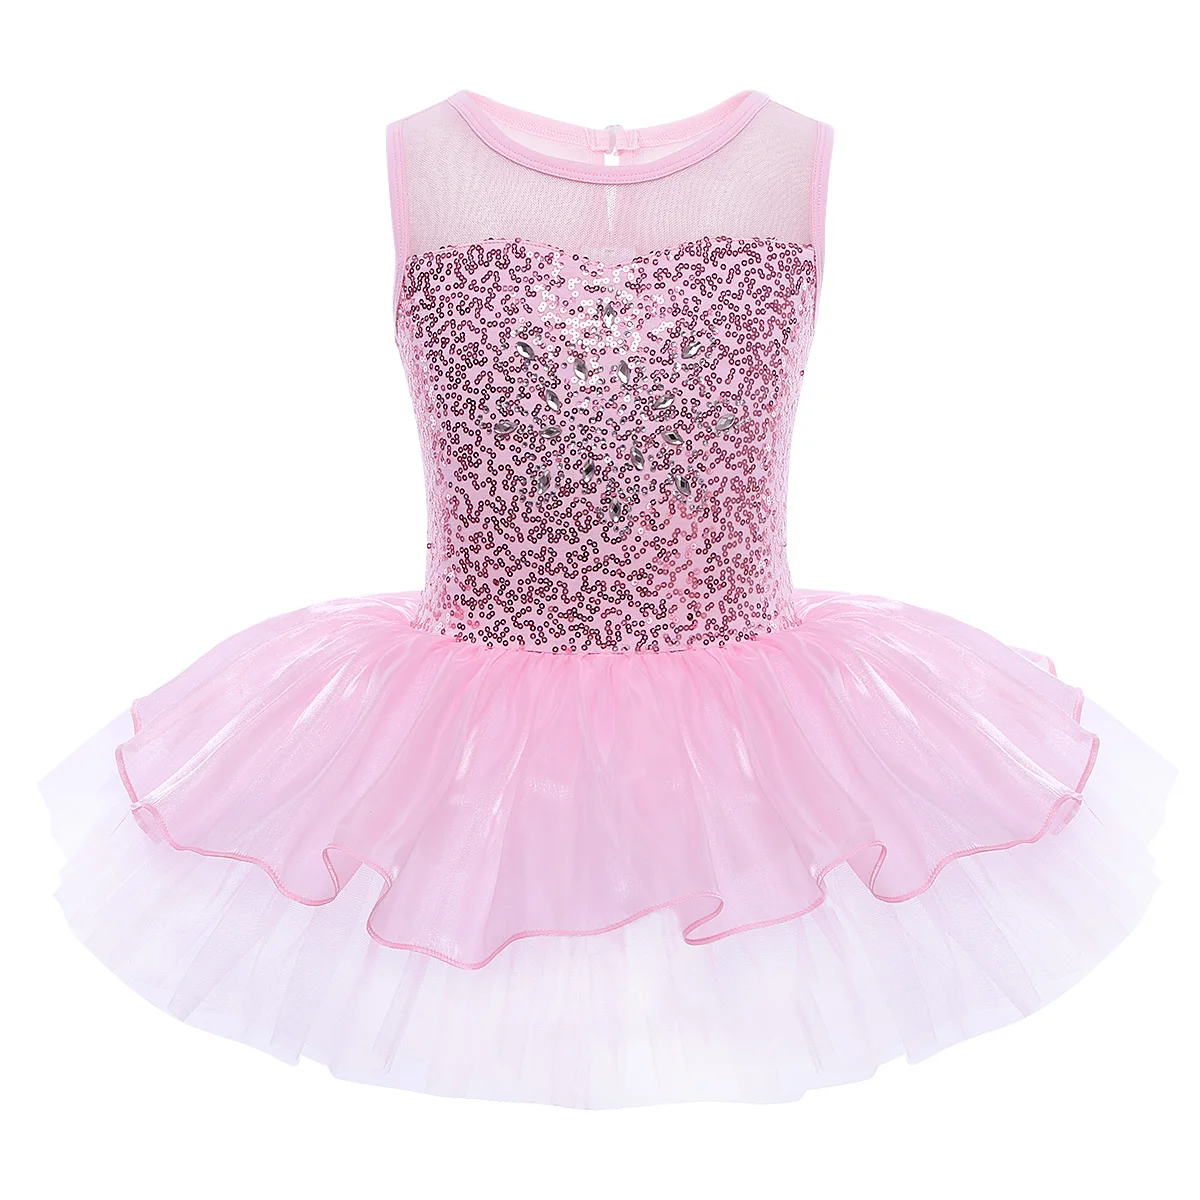 Freebily Girls Kids Sequins Ballet Dance Tutu Dress Ballerina Fairy Costume Gymnastic Leotard Asymmetrical Skirt 